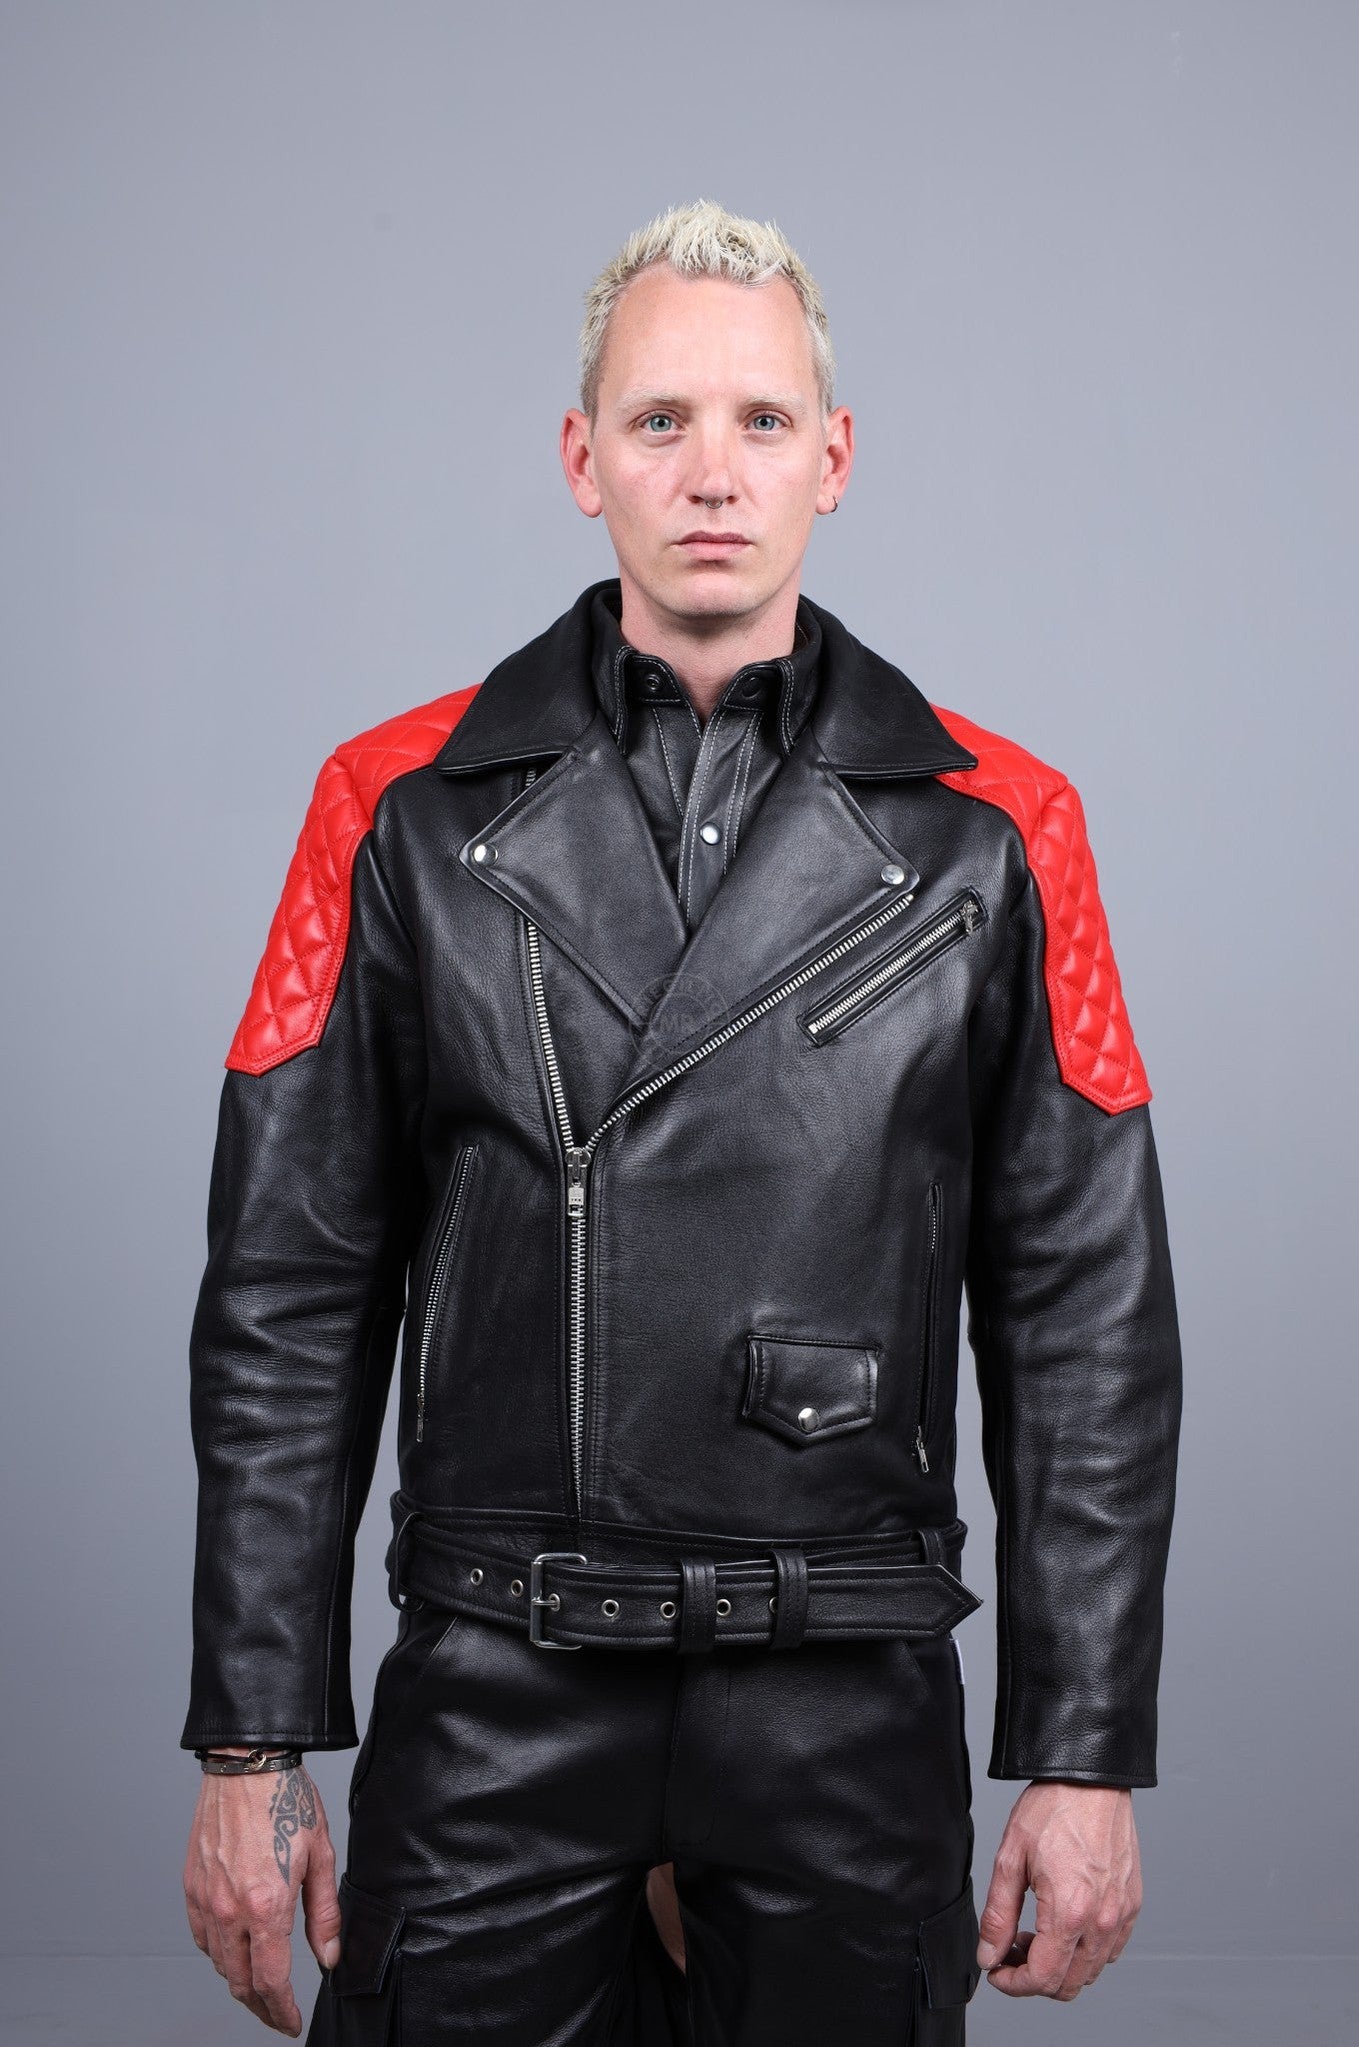 Leather Brando Jacket - Red Padding at MR. Riegillio